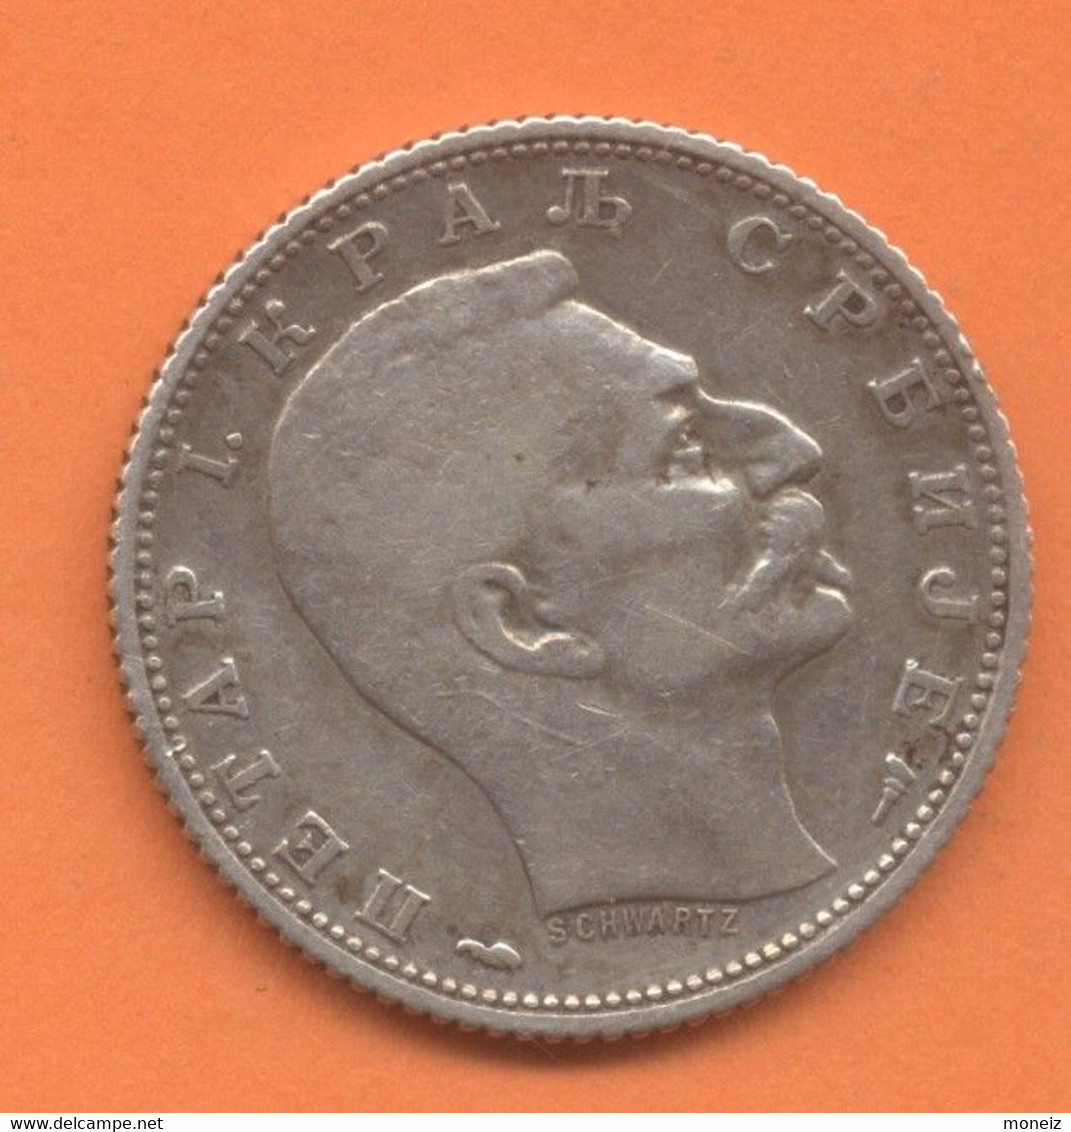 SERBIE 2 Dinara 1879  + 1 DINARA 1915   ARGENT // SILVER - Serbie